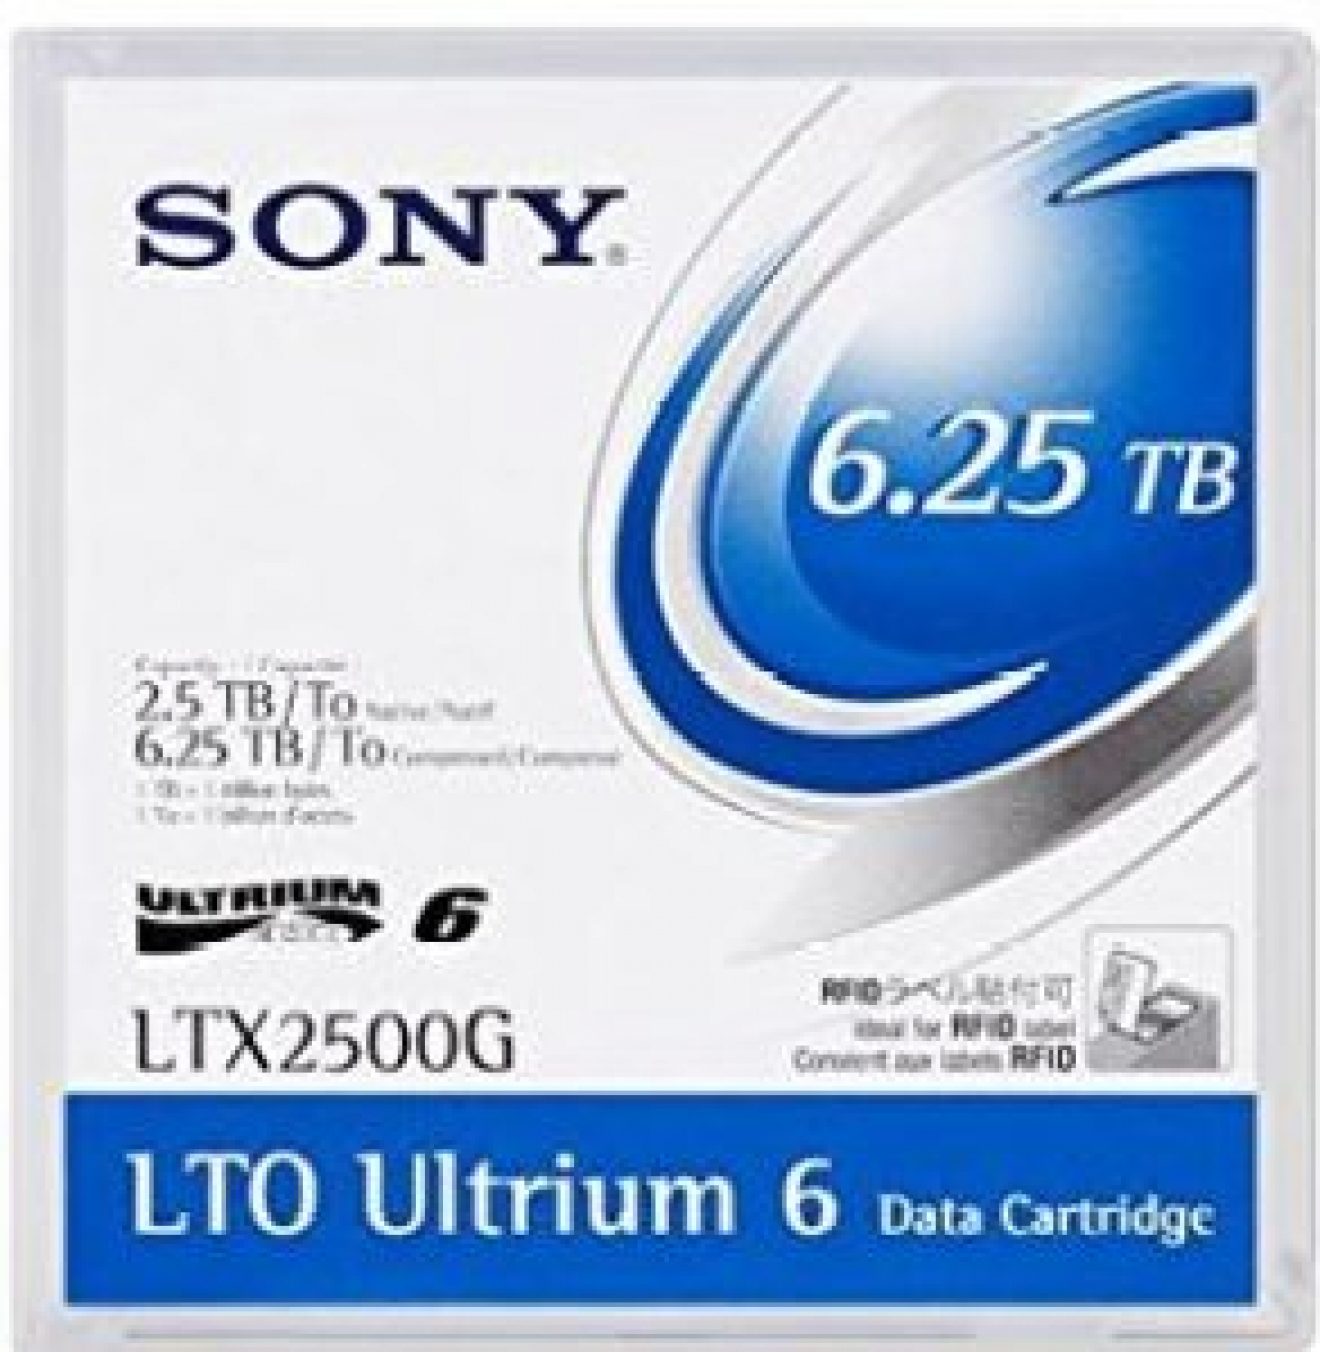 Sell LTO6 Tape Storage Media - We Buy Used IT Equipment